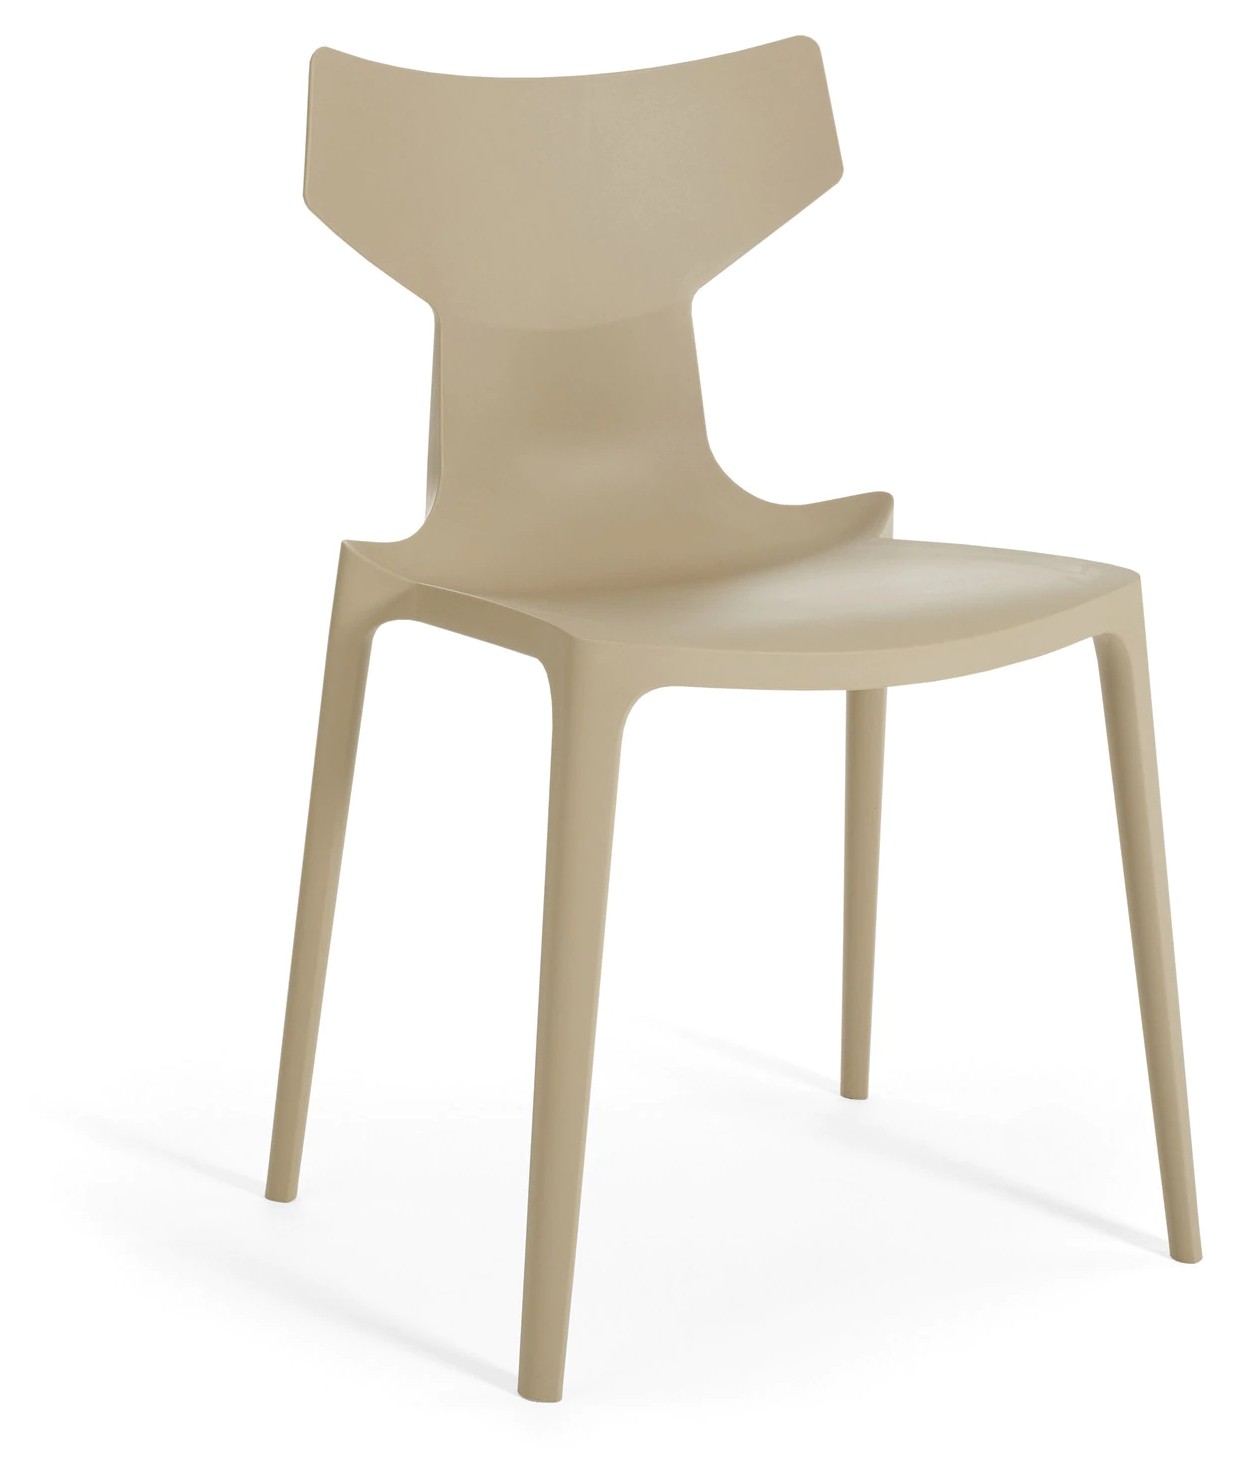 Scaun Kartell Re-Chair design Antonio Citterio gri dove Kartell